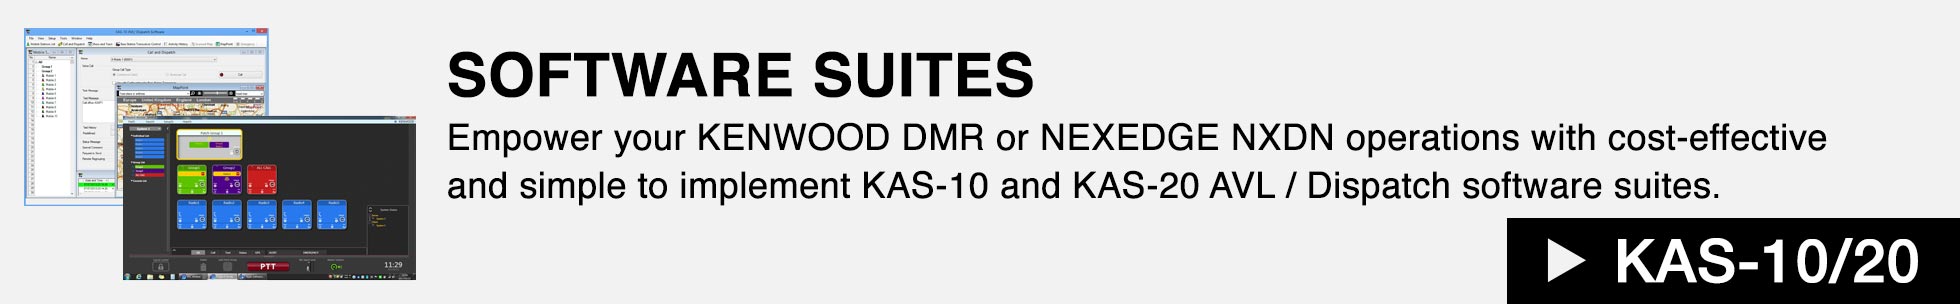 NXDN Software Suites - KAS-10/20